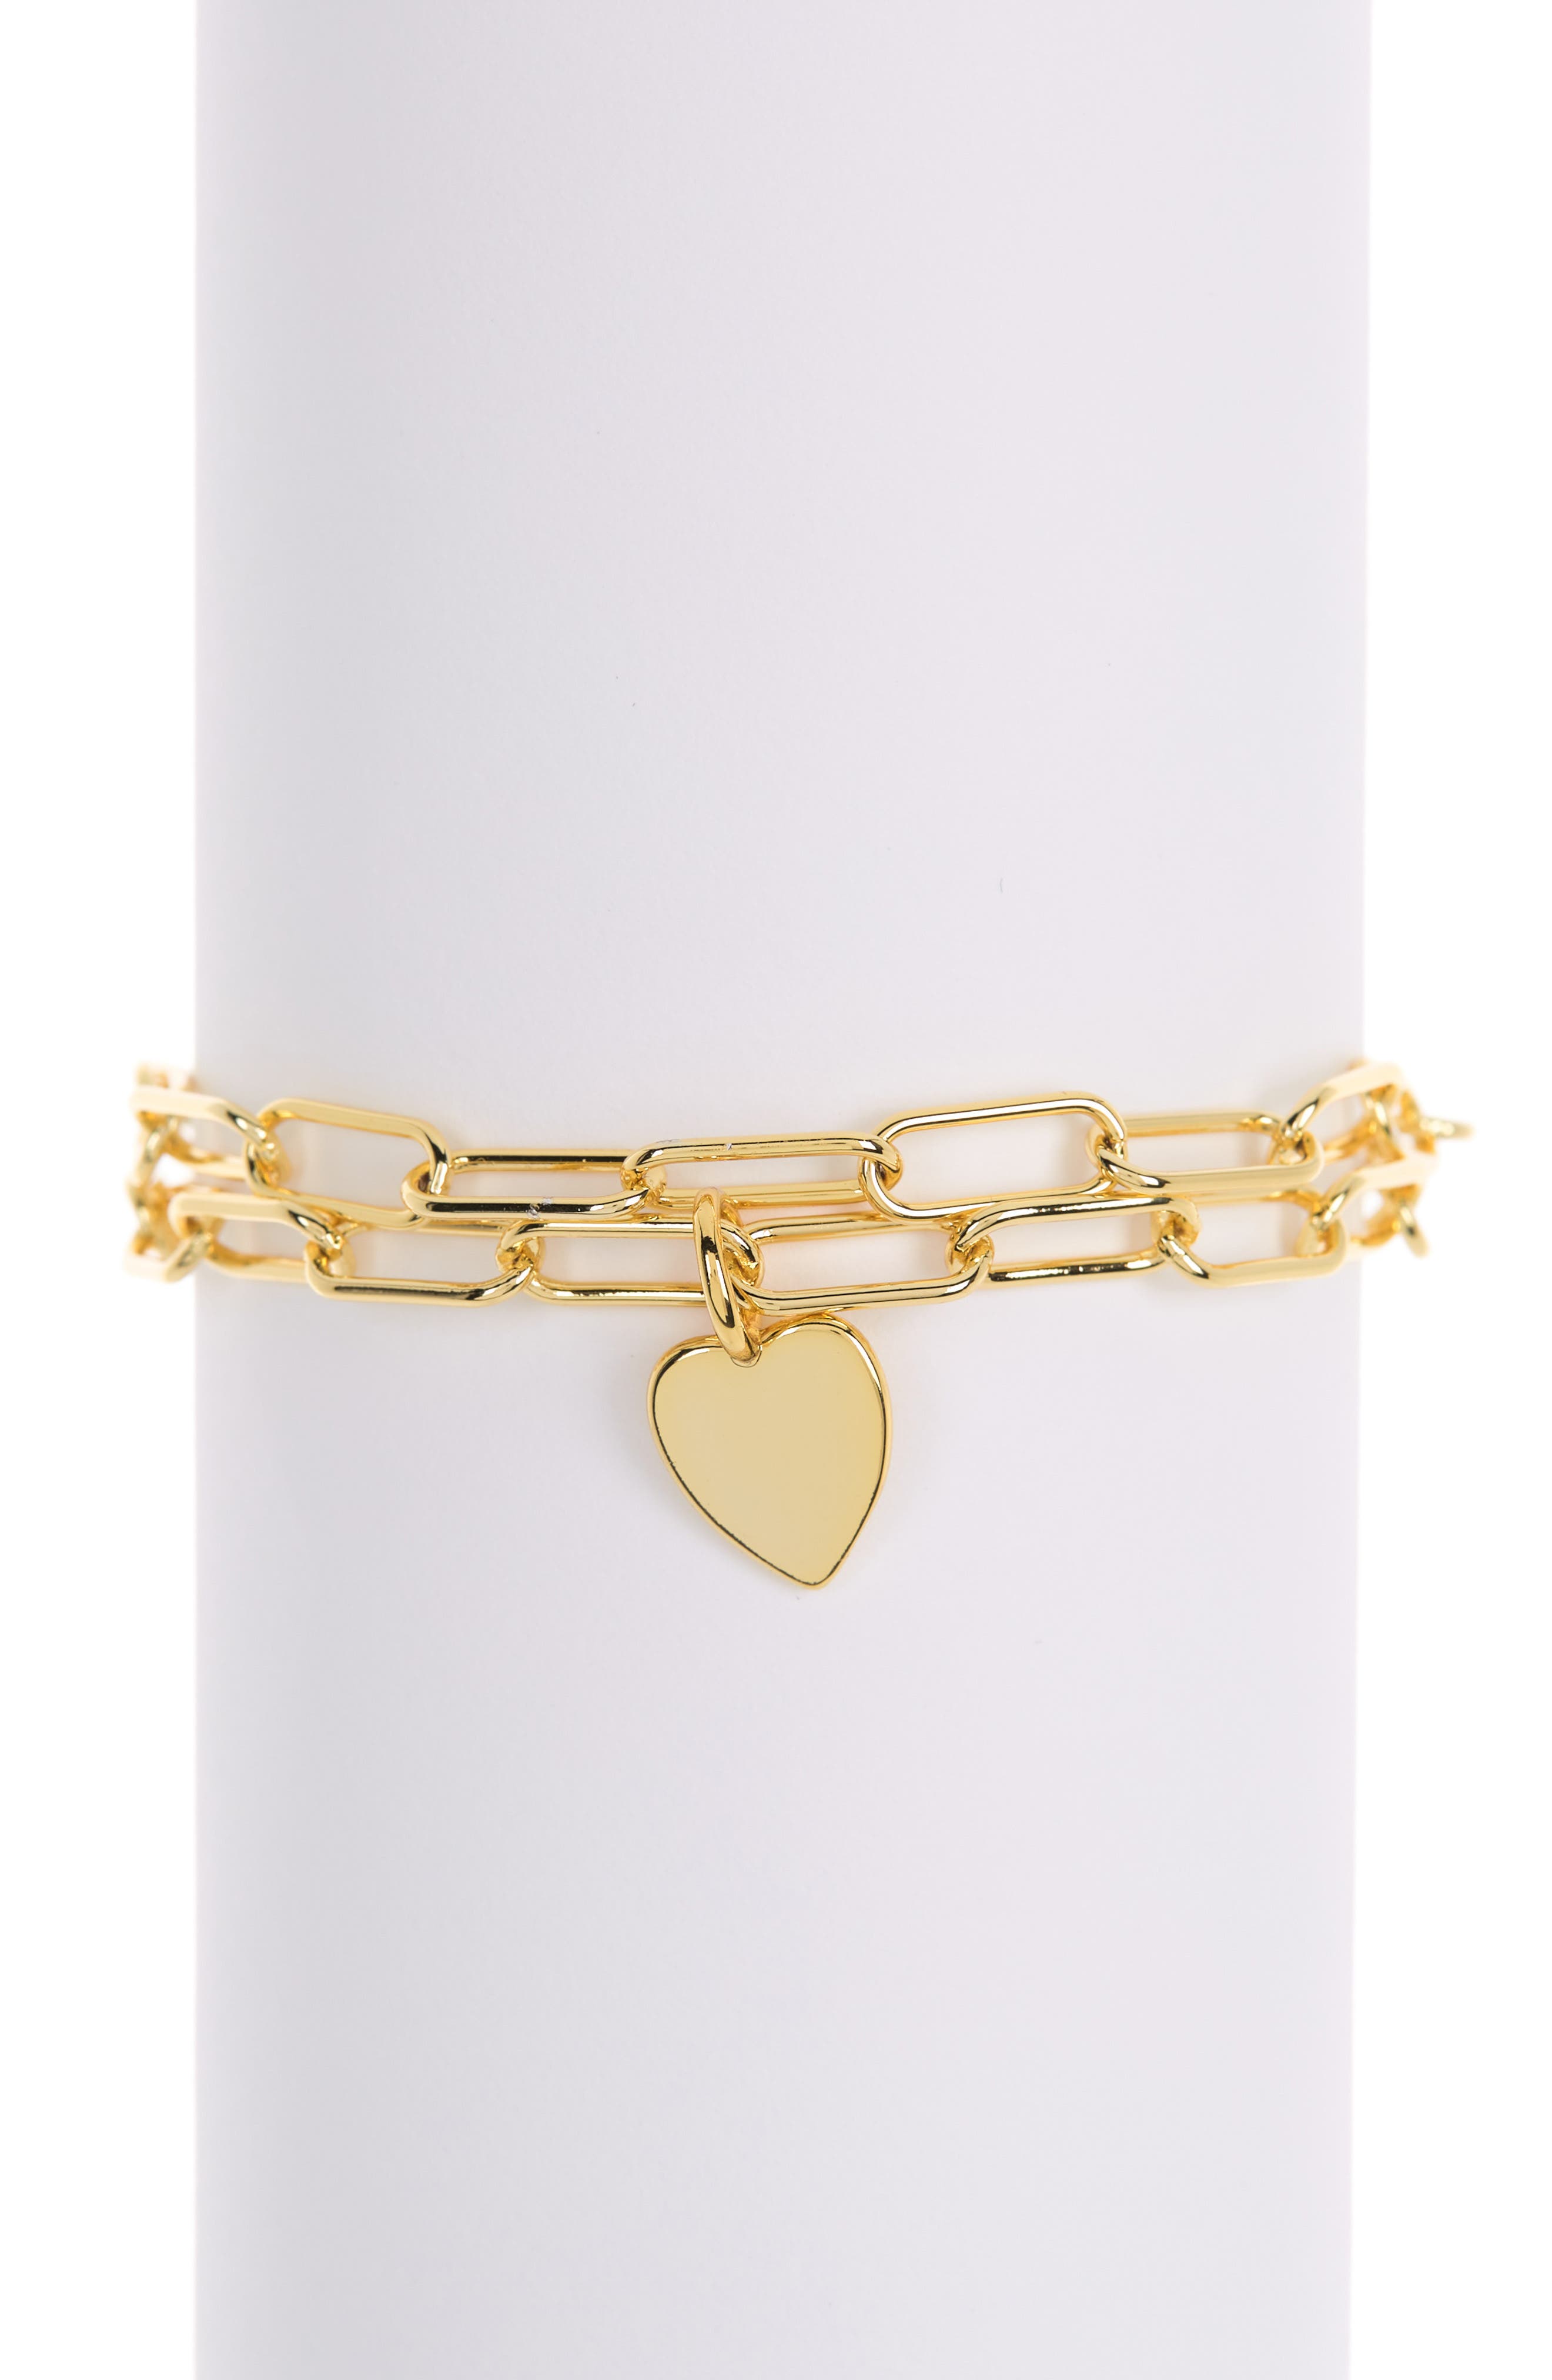 Halcyon Days Gold Plated Black Heart Beaded Friendship Bracelet New RRP £85.00 